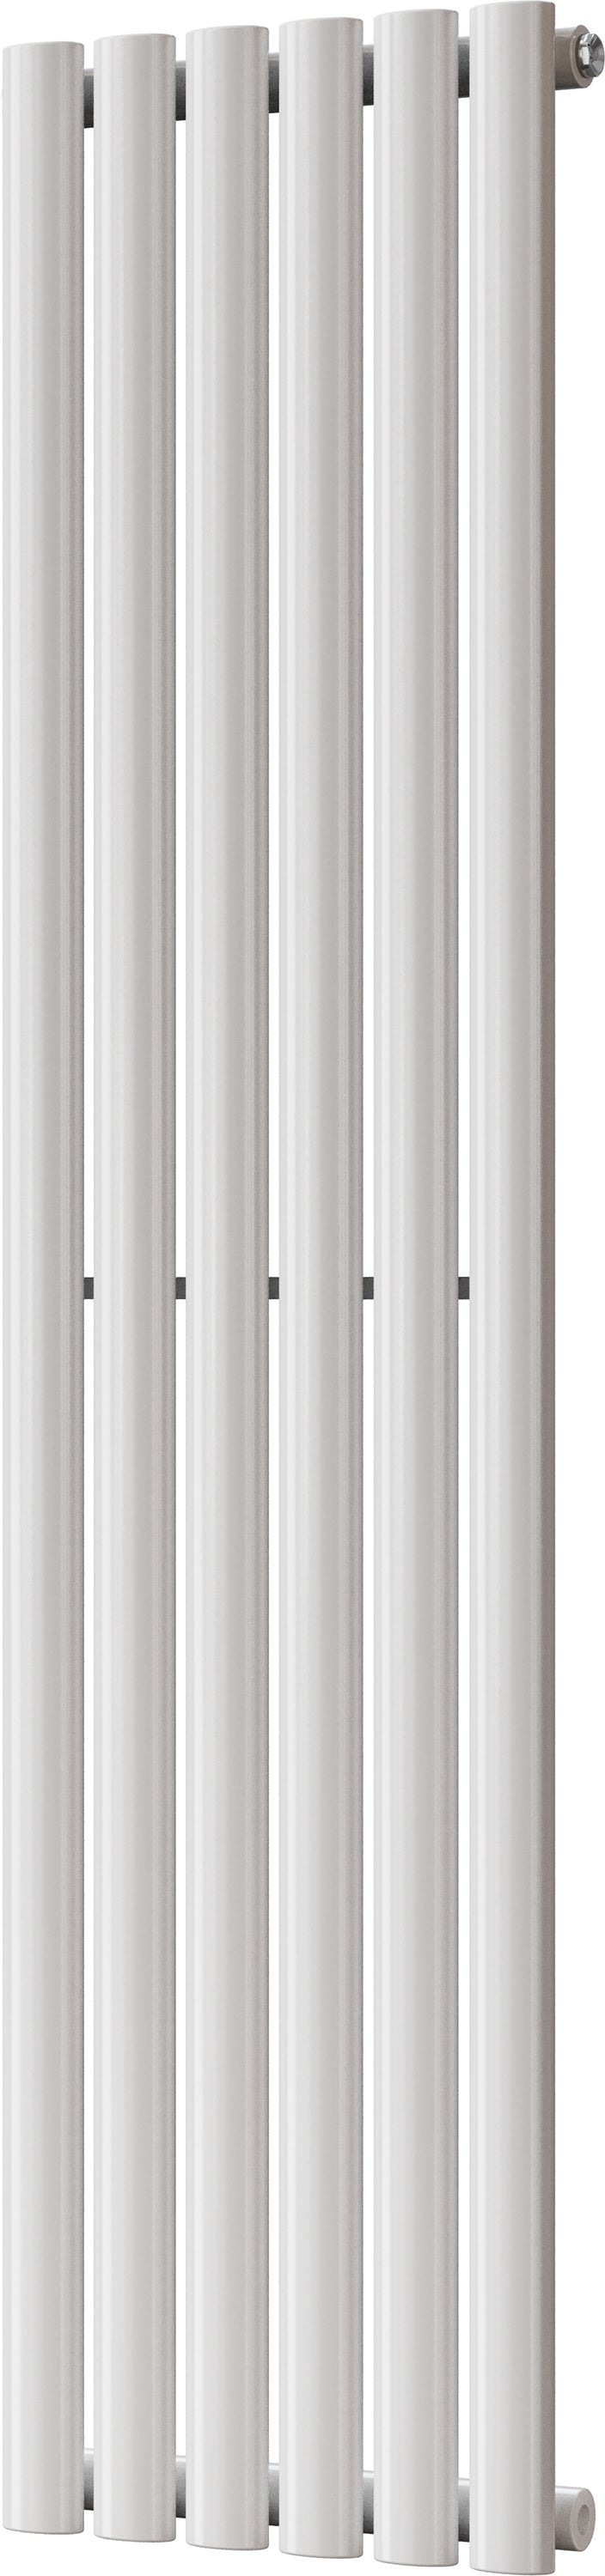 Omeara - White Vertical Radiator H1400mm x W348mm Single Panel